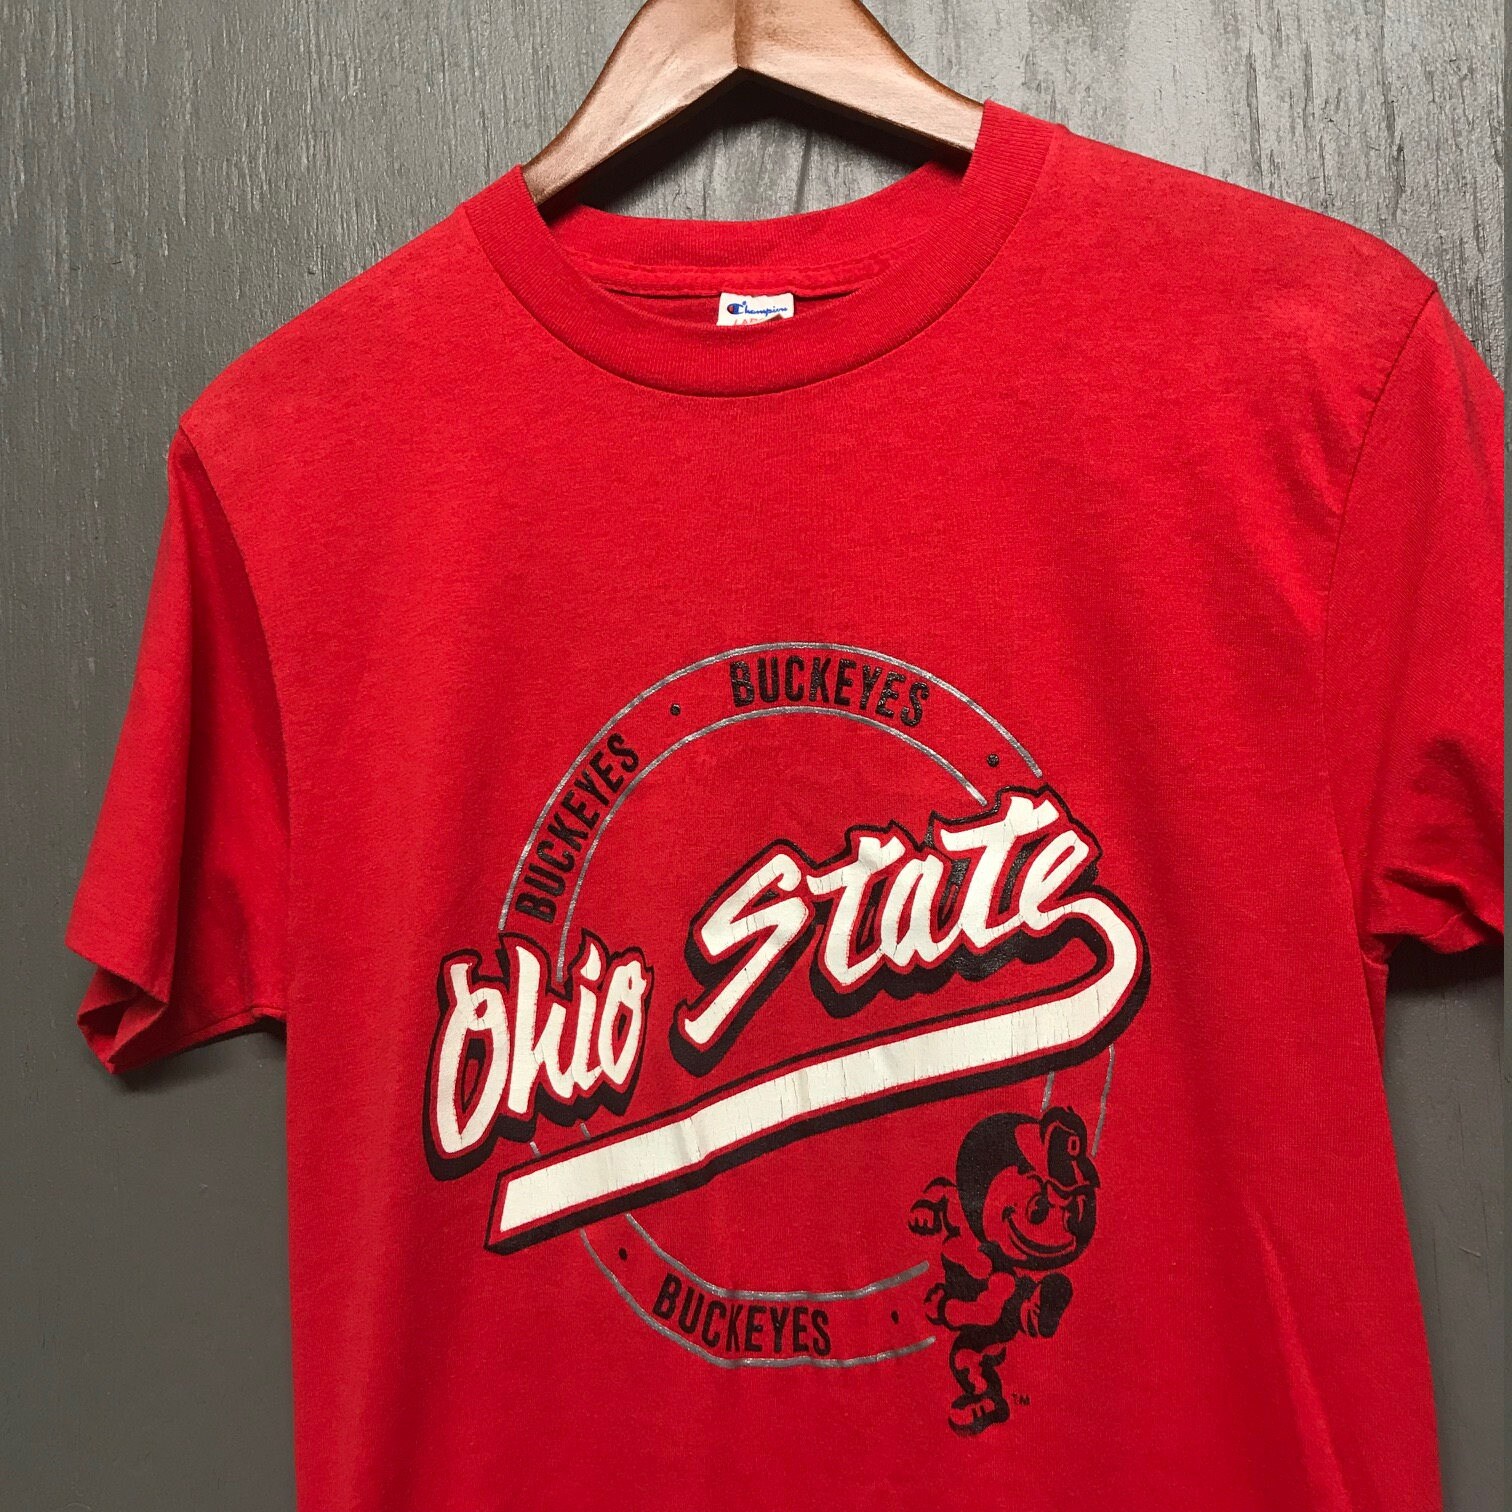 S vintage 80s Champion Ohio State Buckeyes t shirt